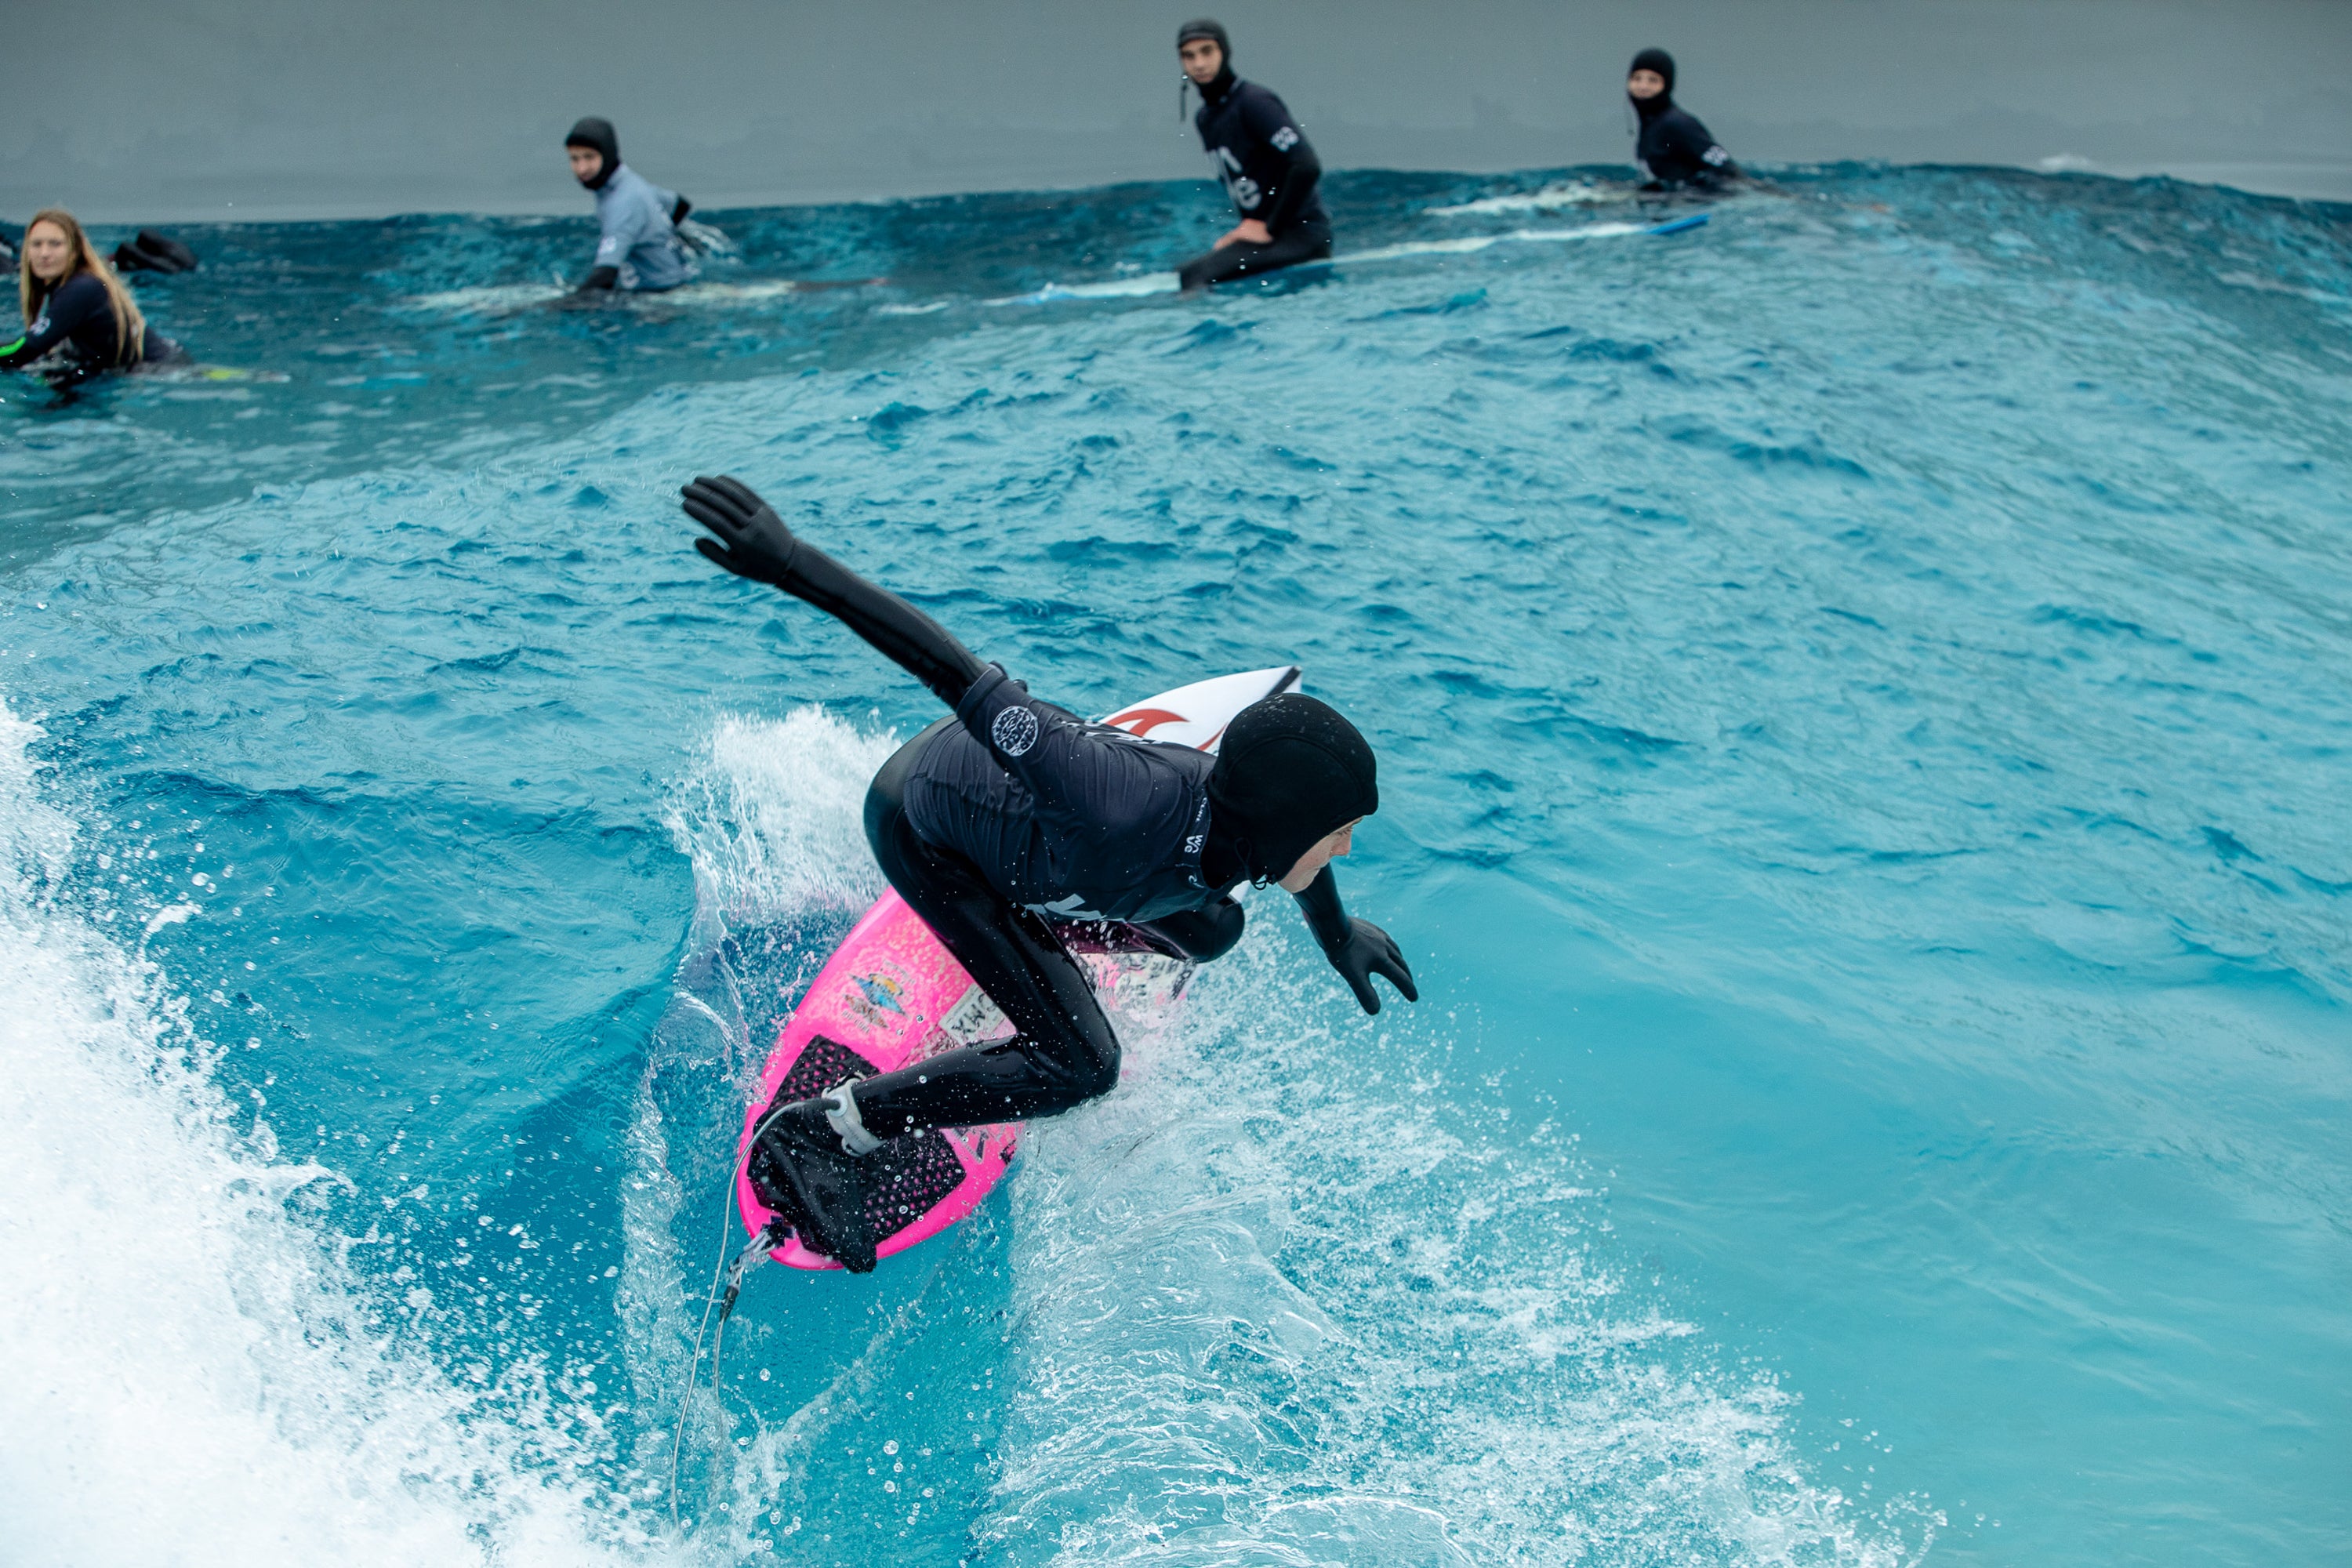 dryrobe ambassador Lukas Skinner surfing at The Wave on Team England Juniors training day